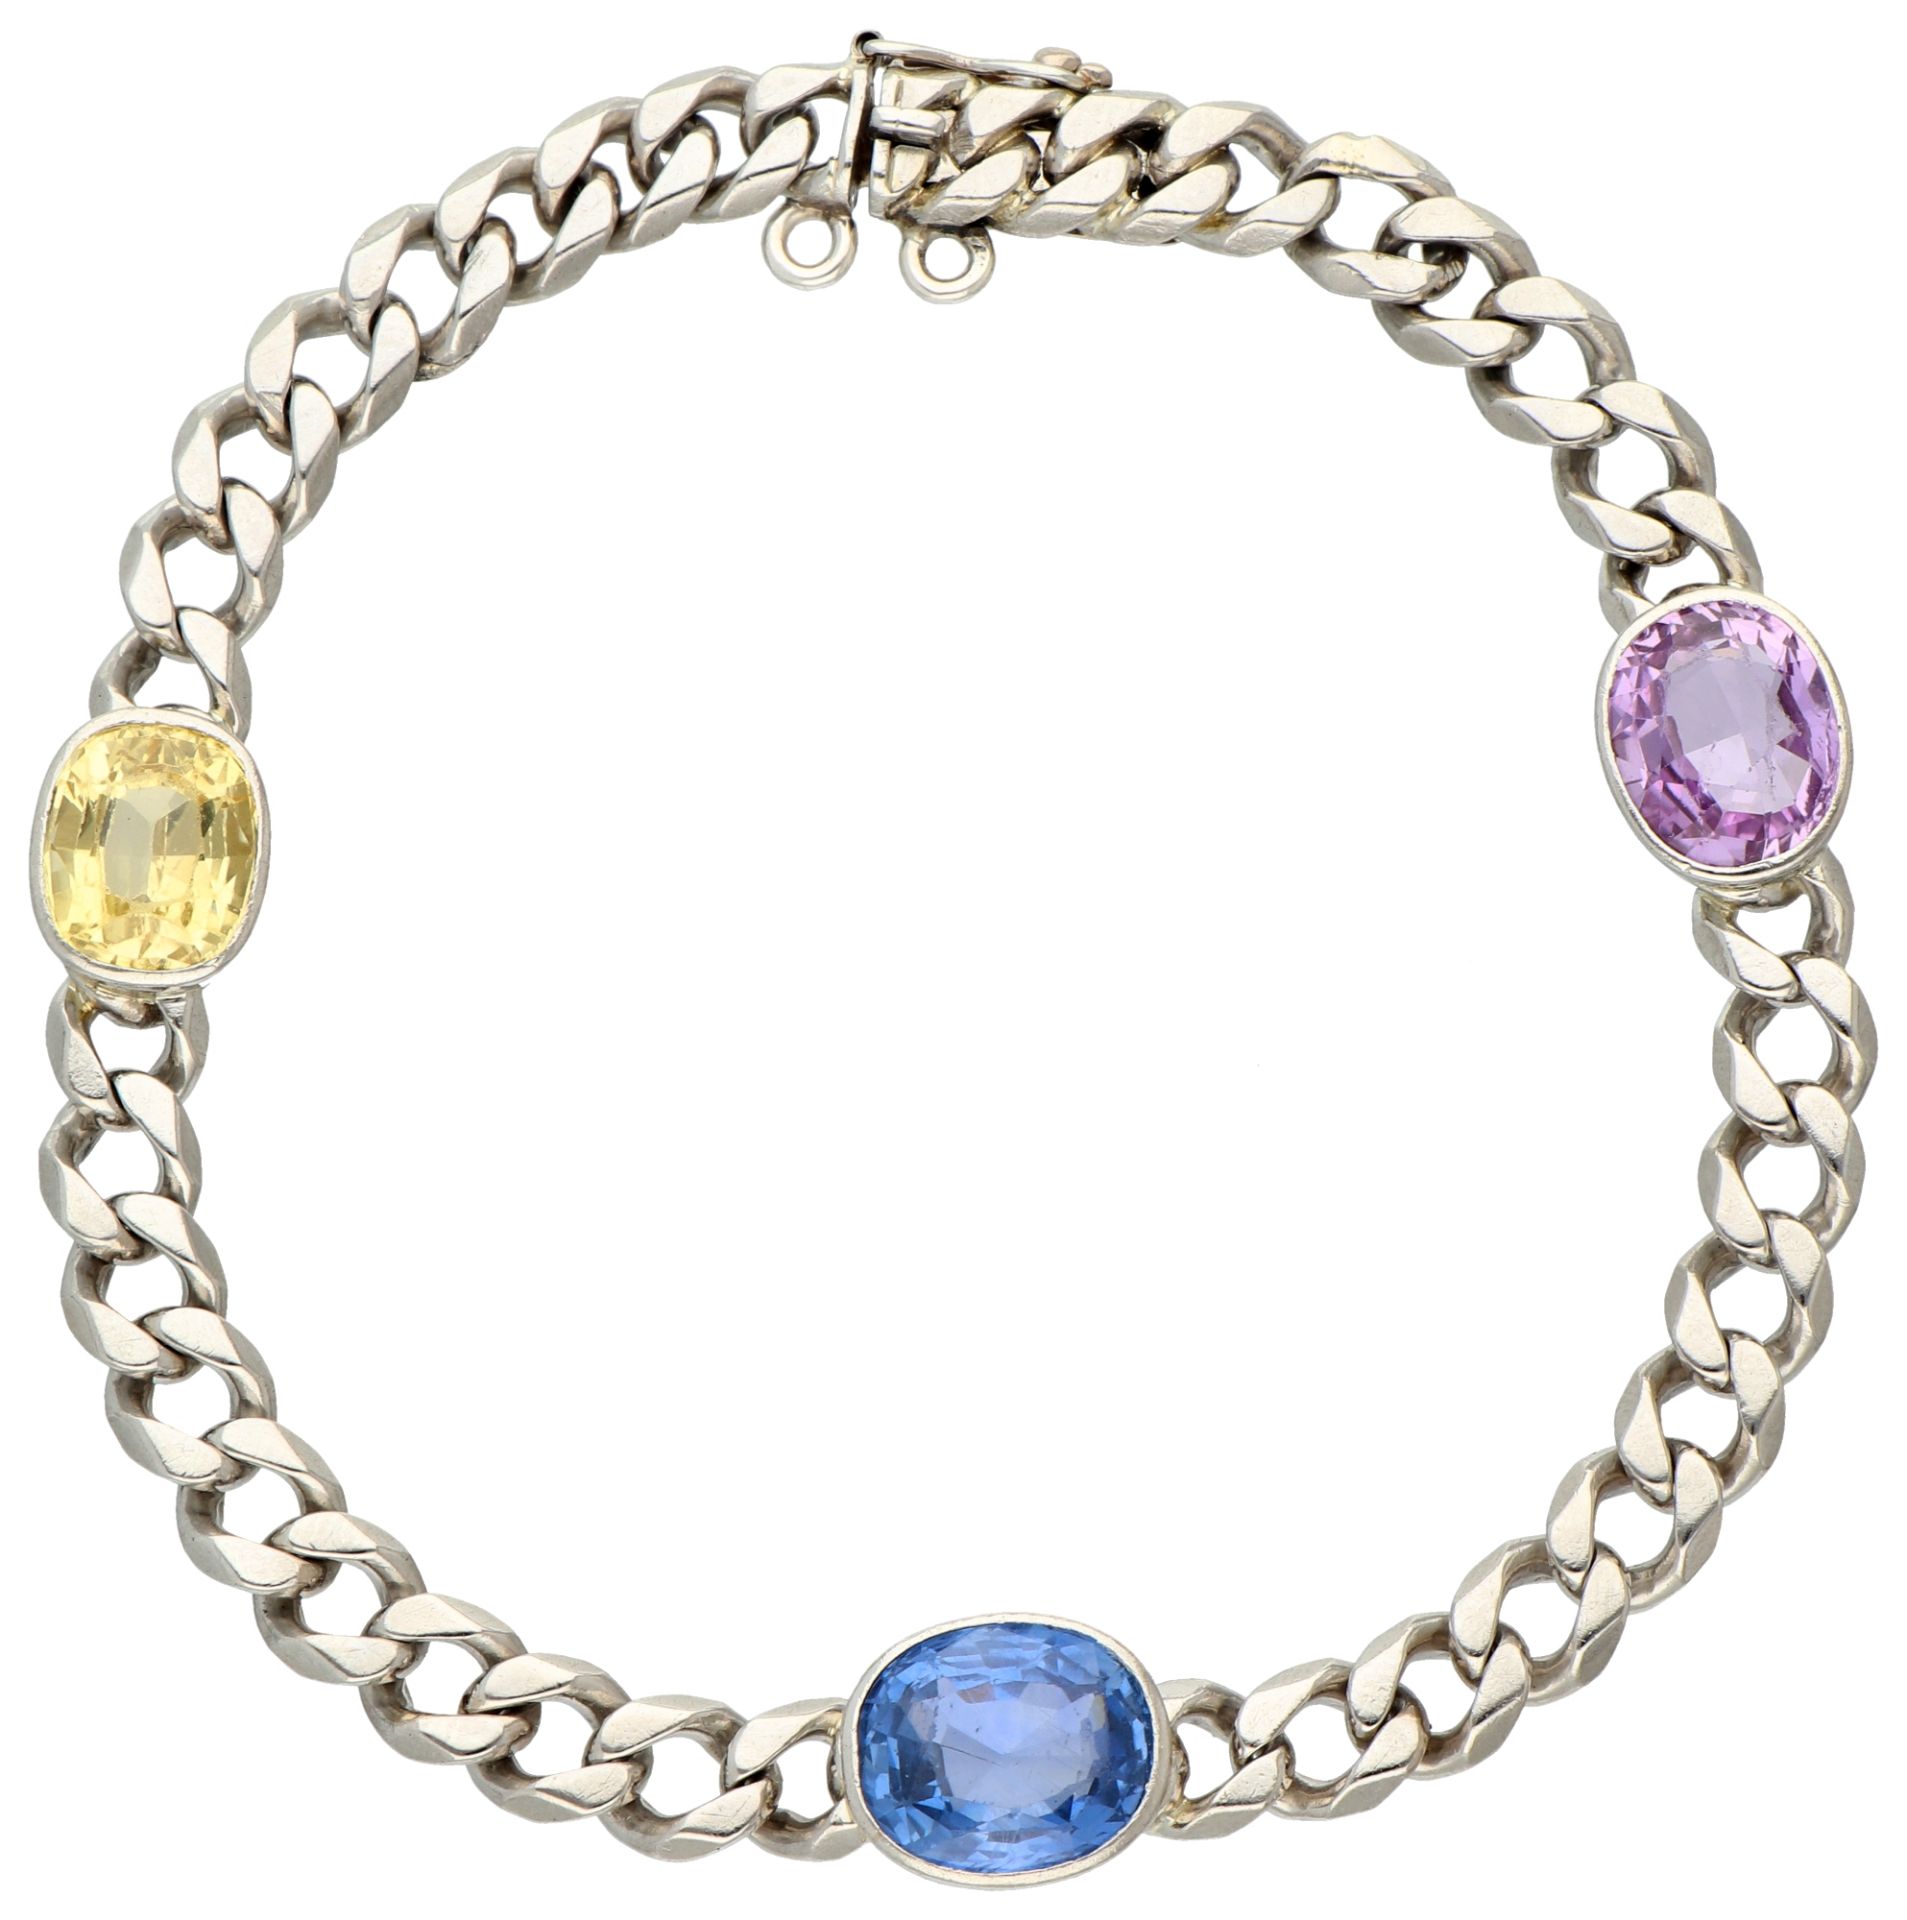 Platinum gourmet link bracelet set with approx. 9.94 ct. natural sapphire.